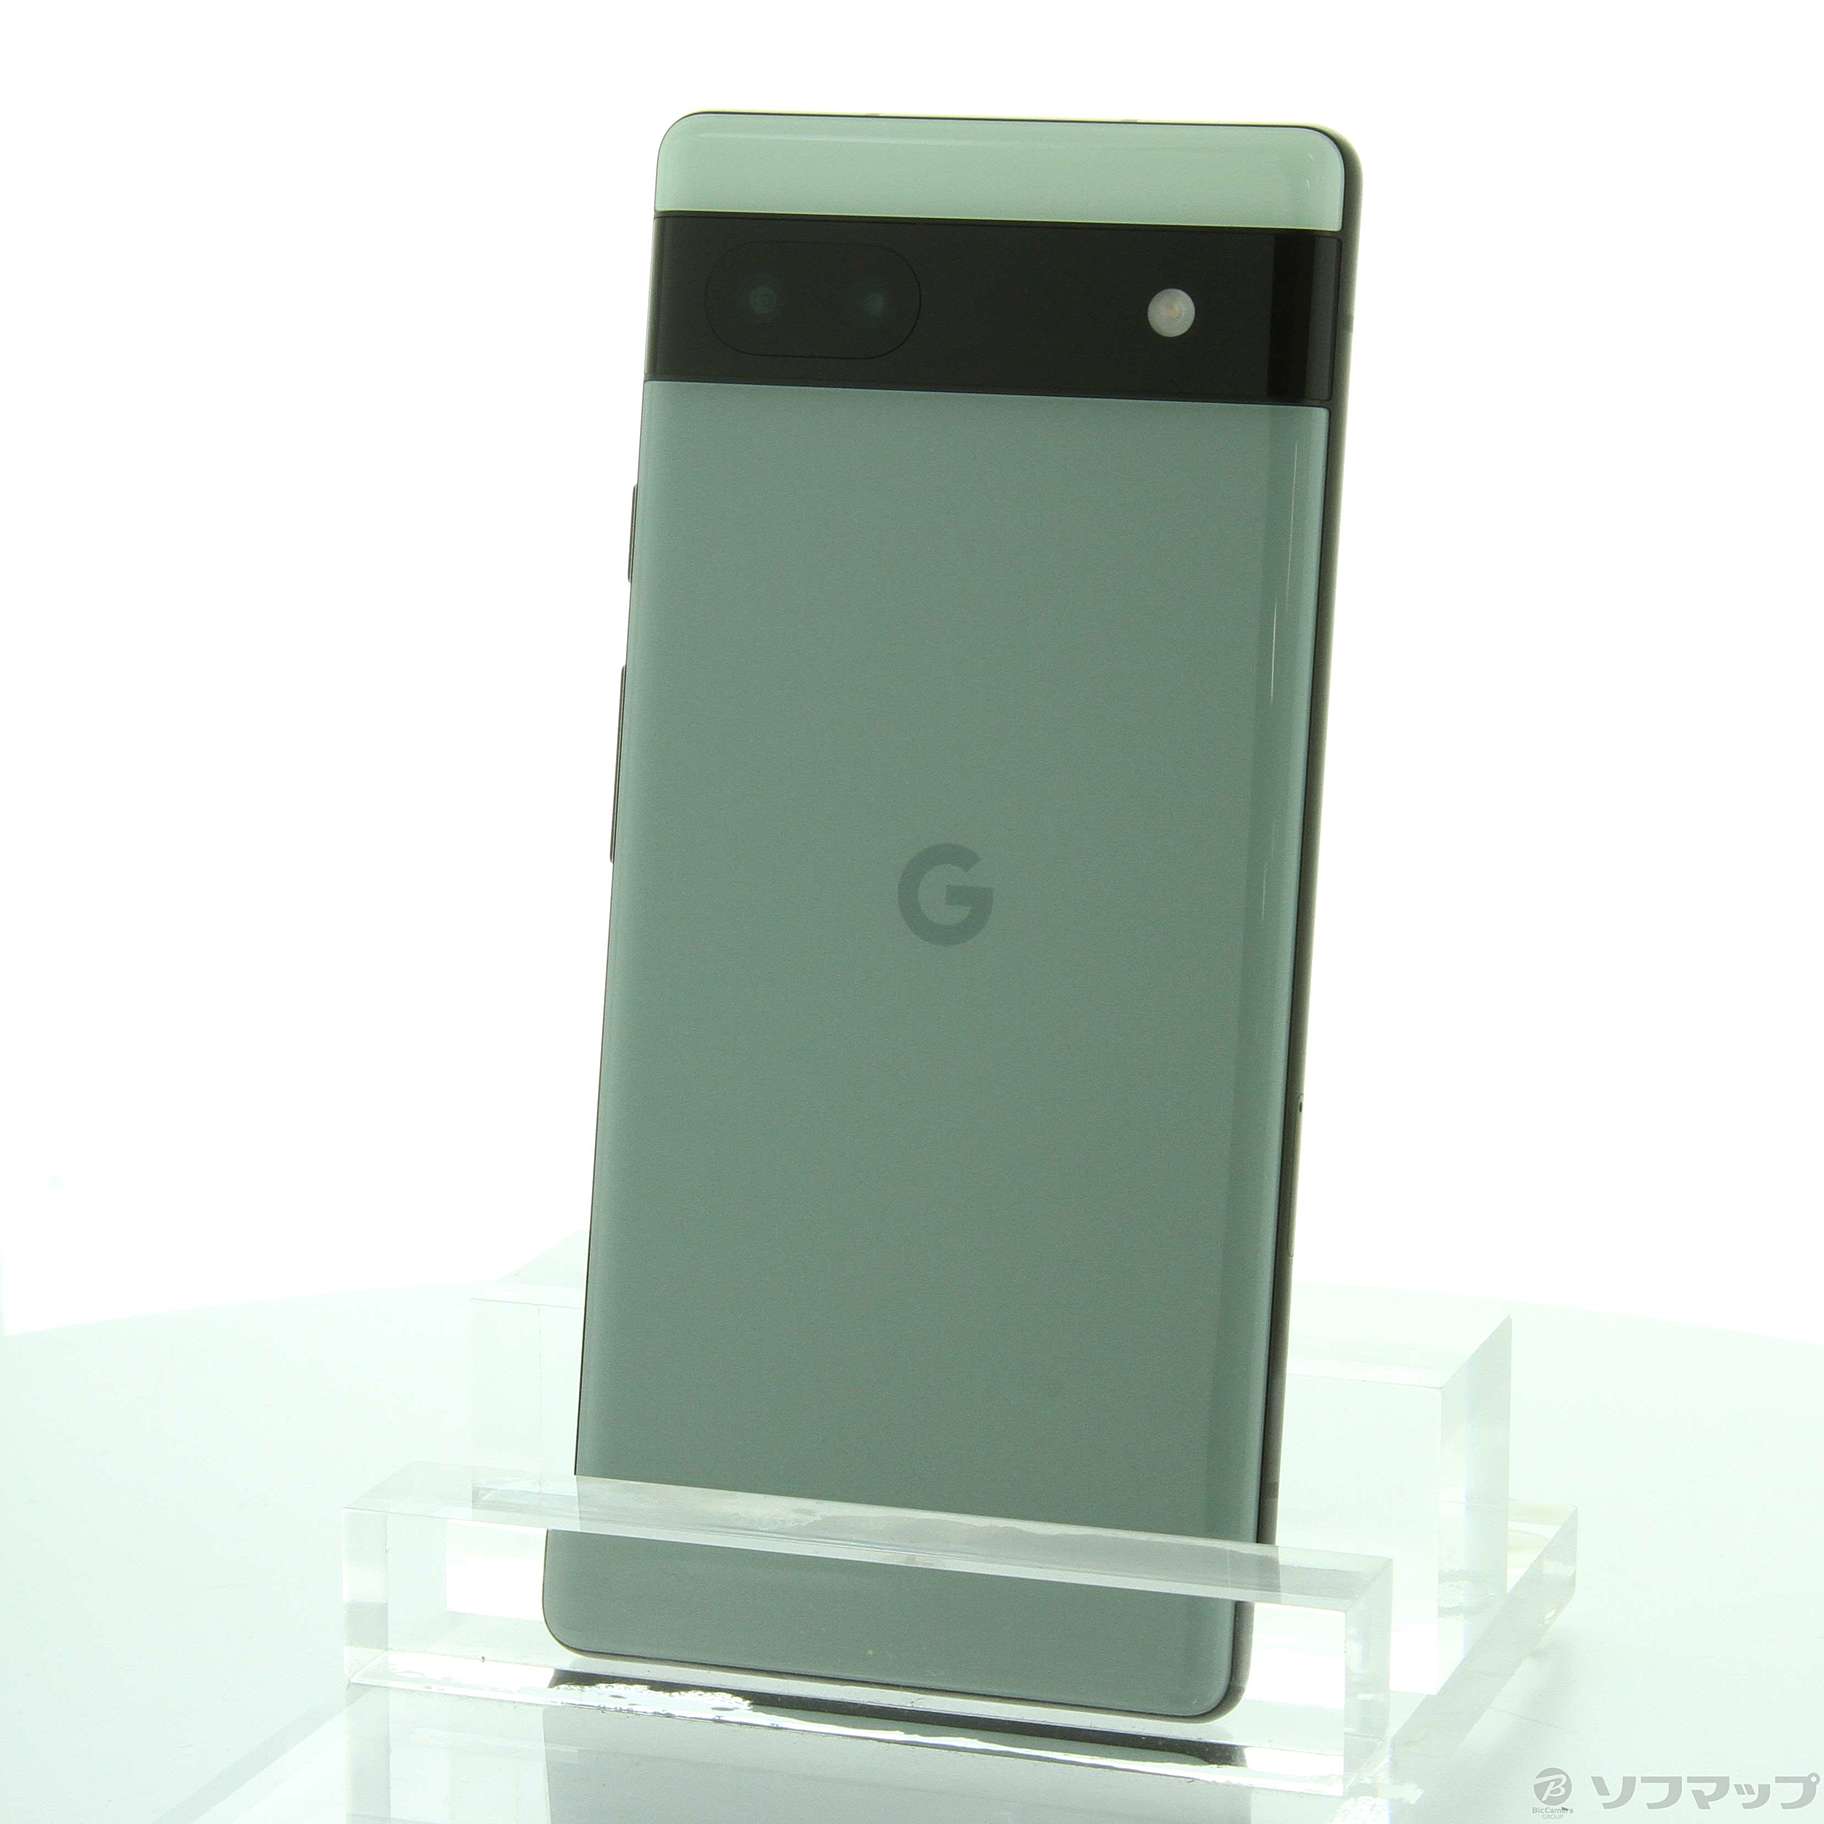 Google Pixel 6a Sage 128 GB au